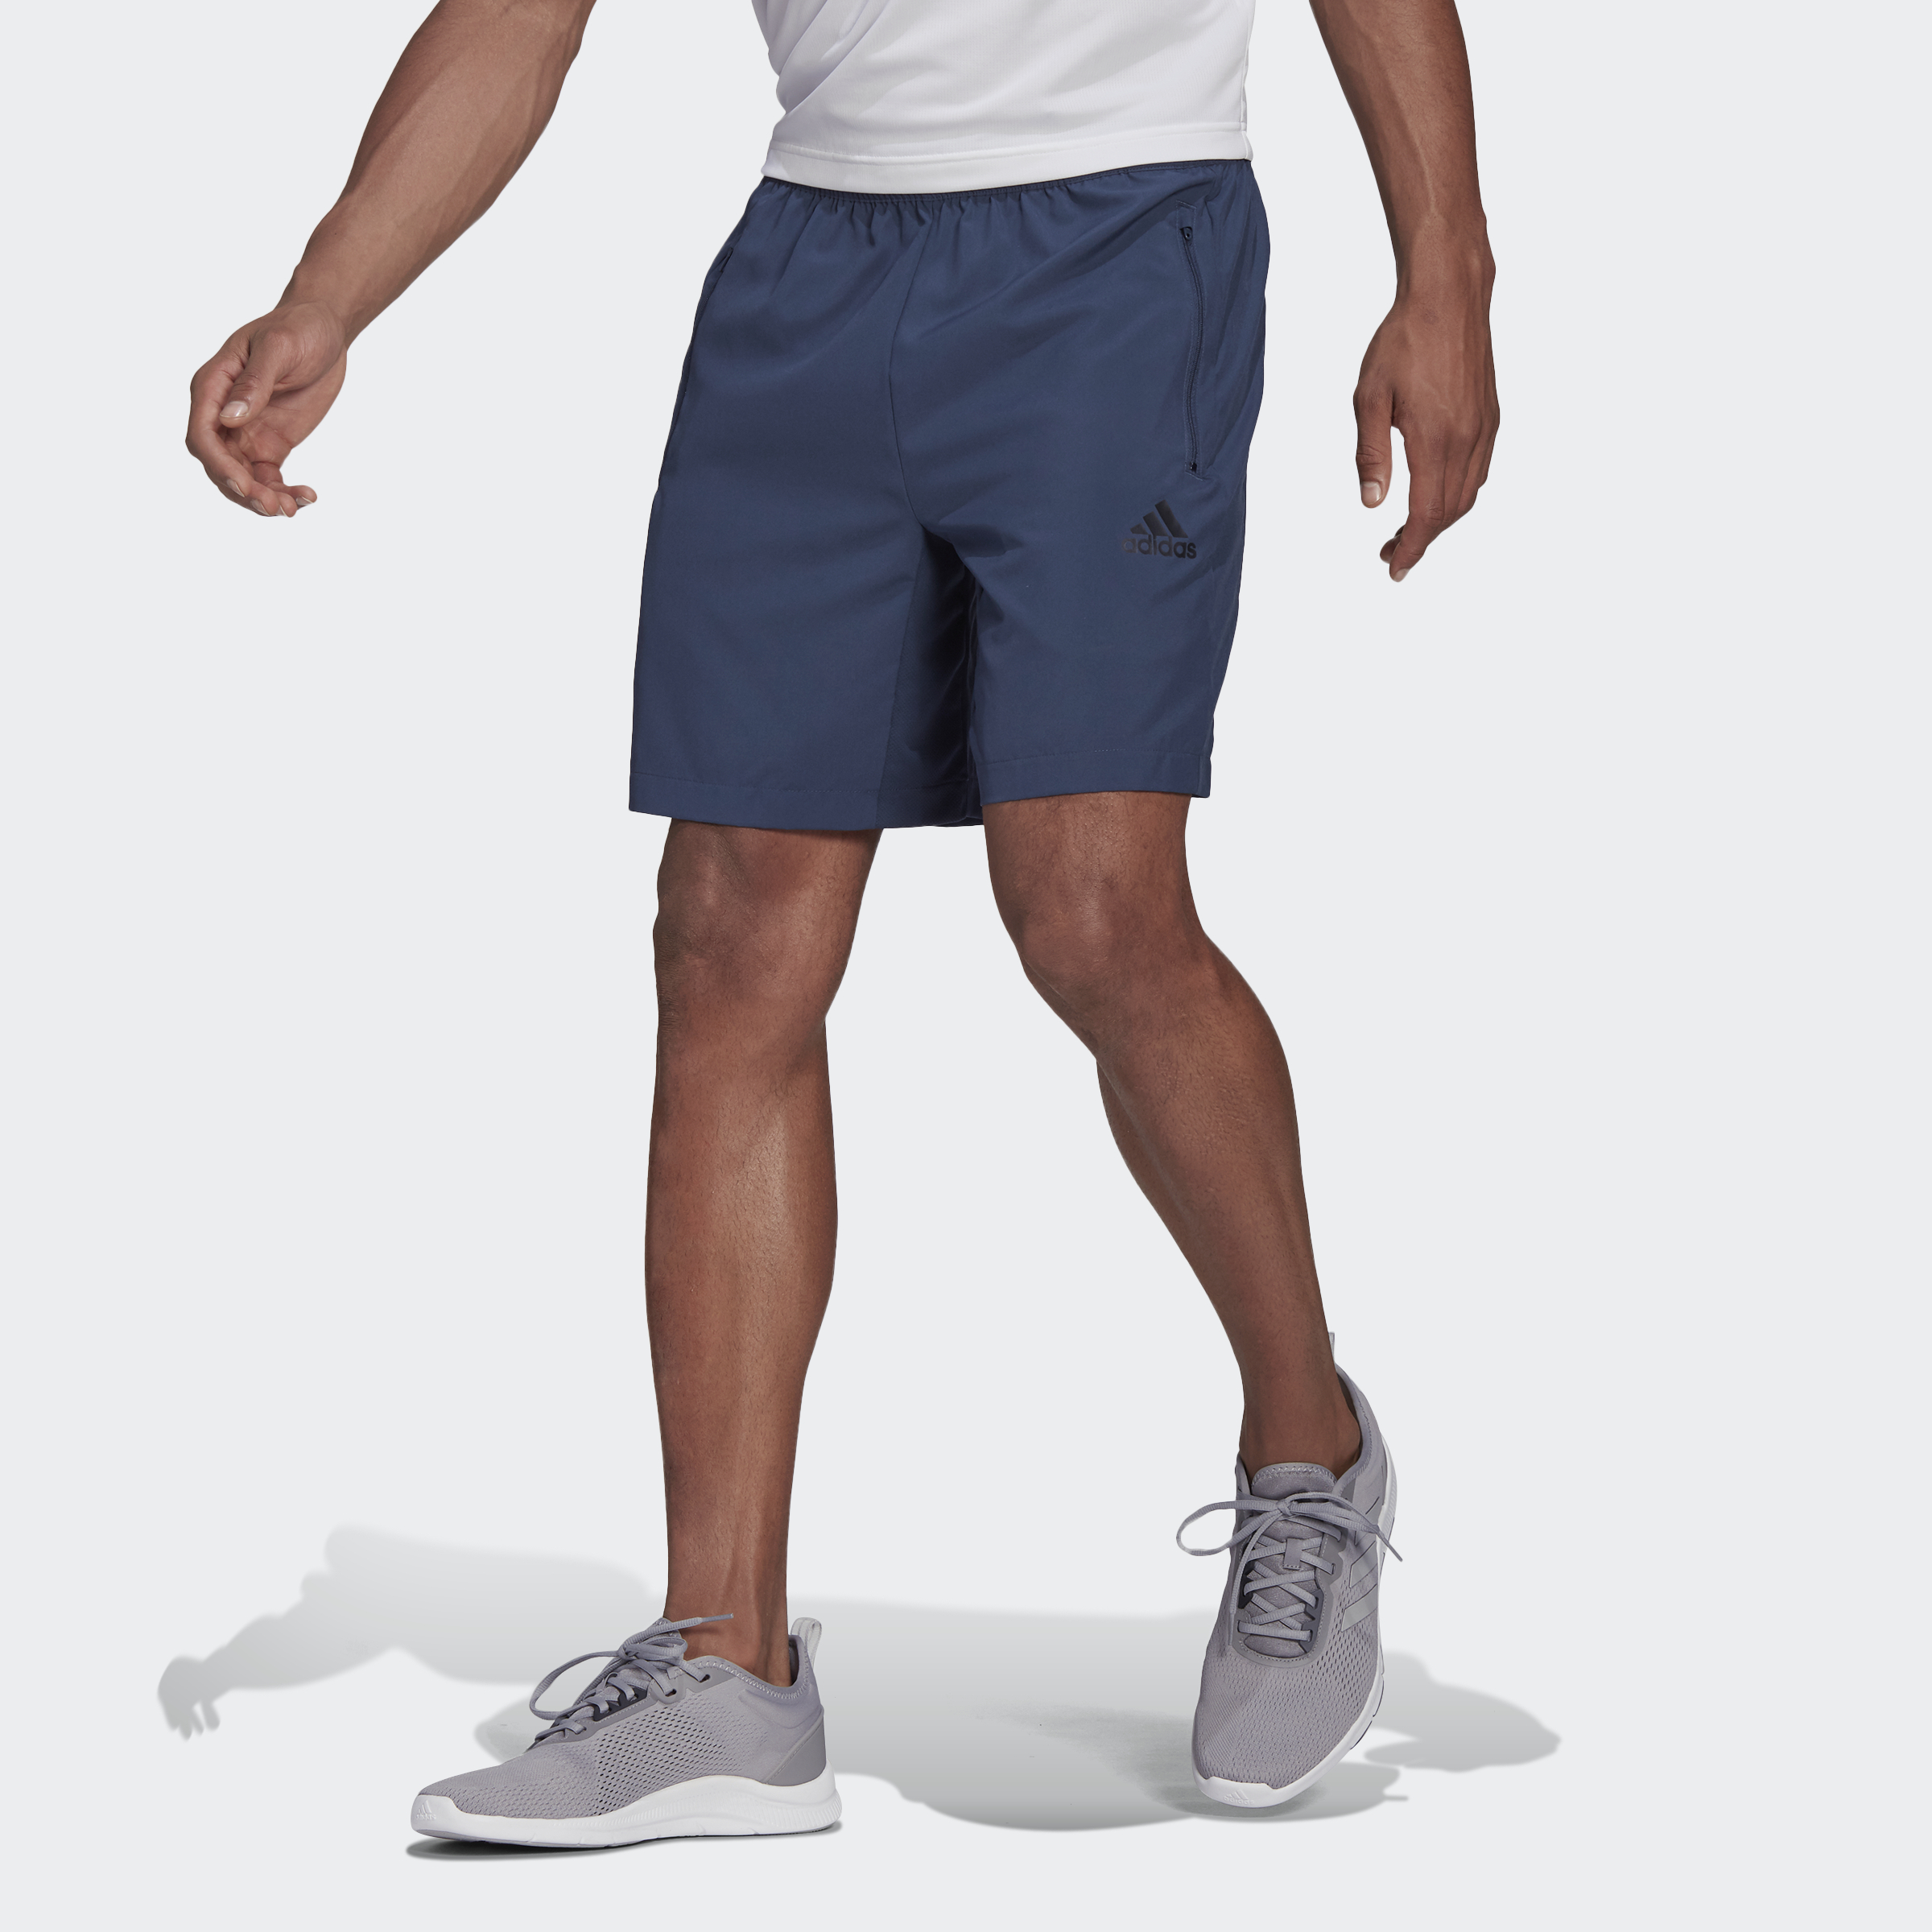 Livlig loyalitet Elemental adidas Men's Aeroready Designed to Move Woven Sport Shorts w/ Zip Pockets